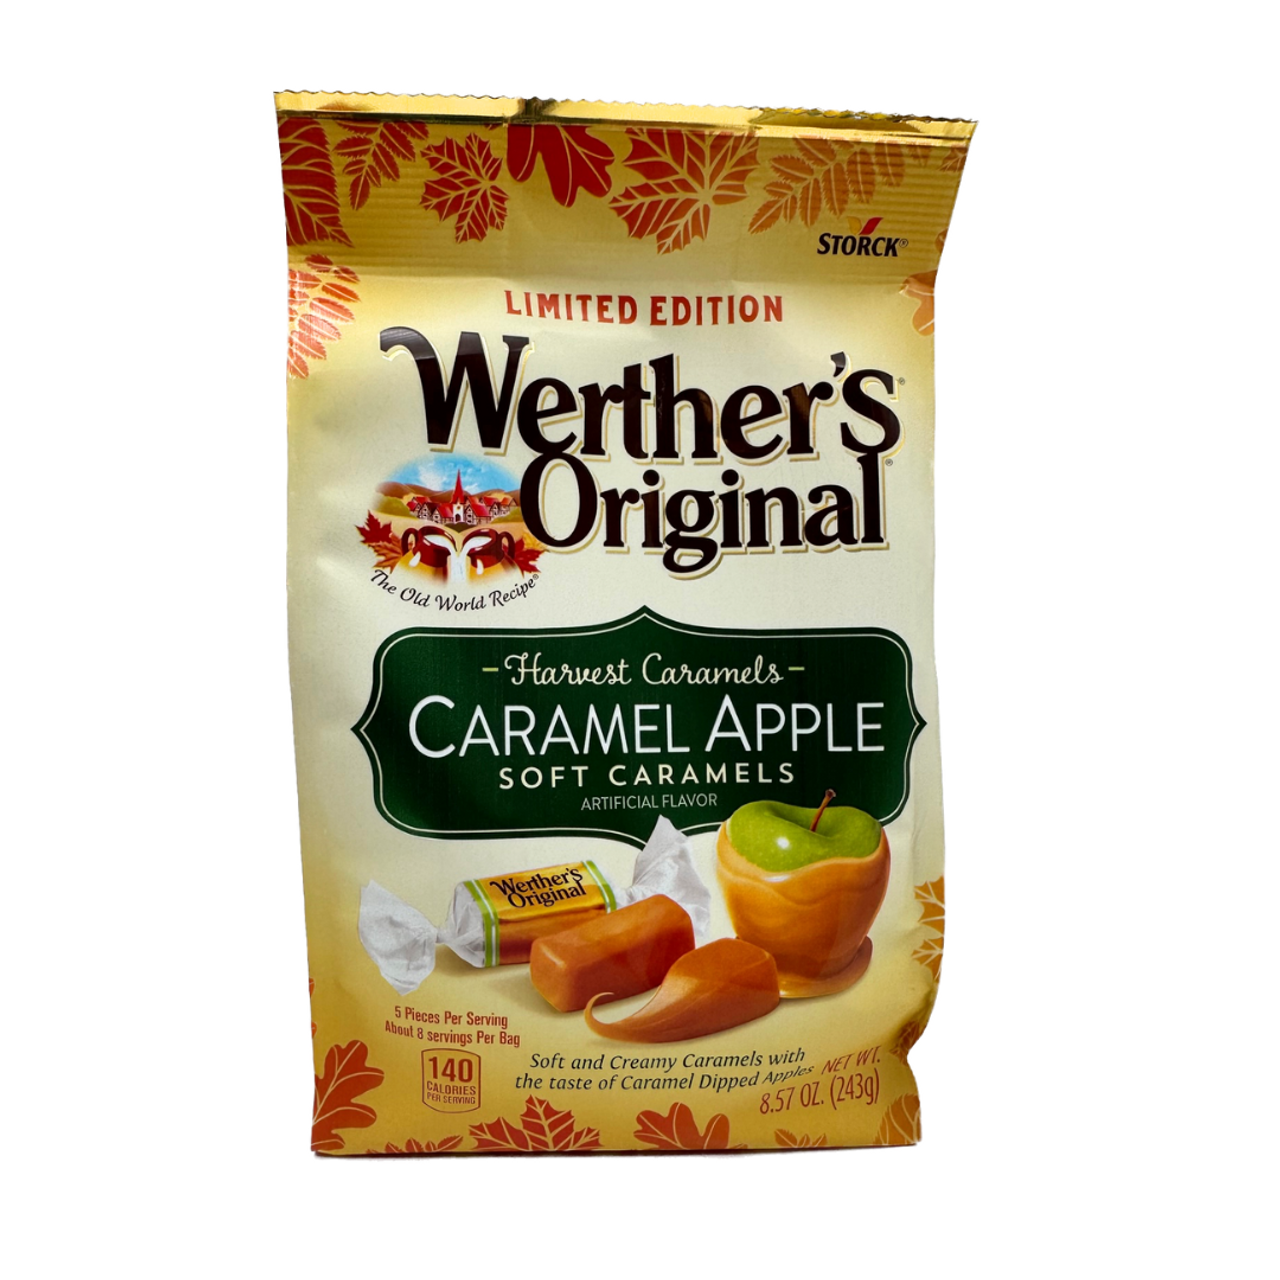 Werther's Originals Caramel Apple Soft Caramels 8.57oz - 12ct